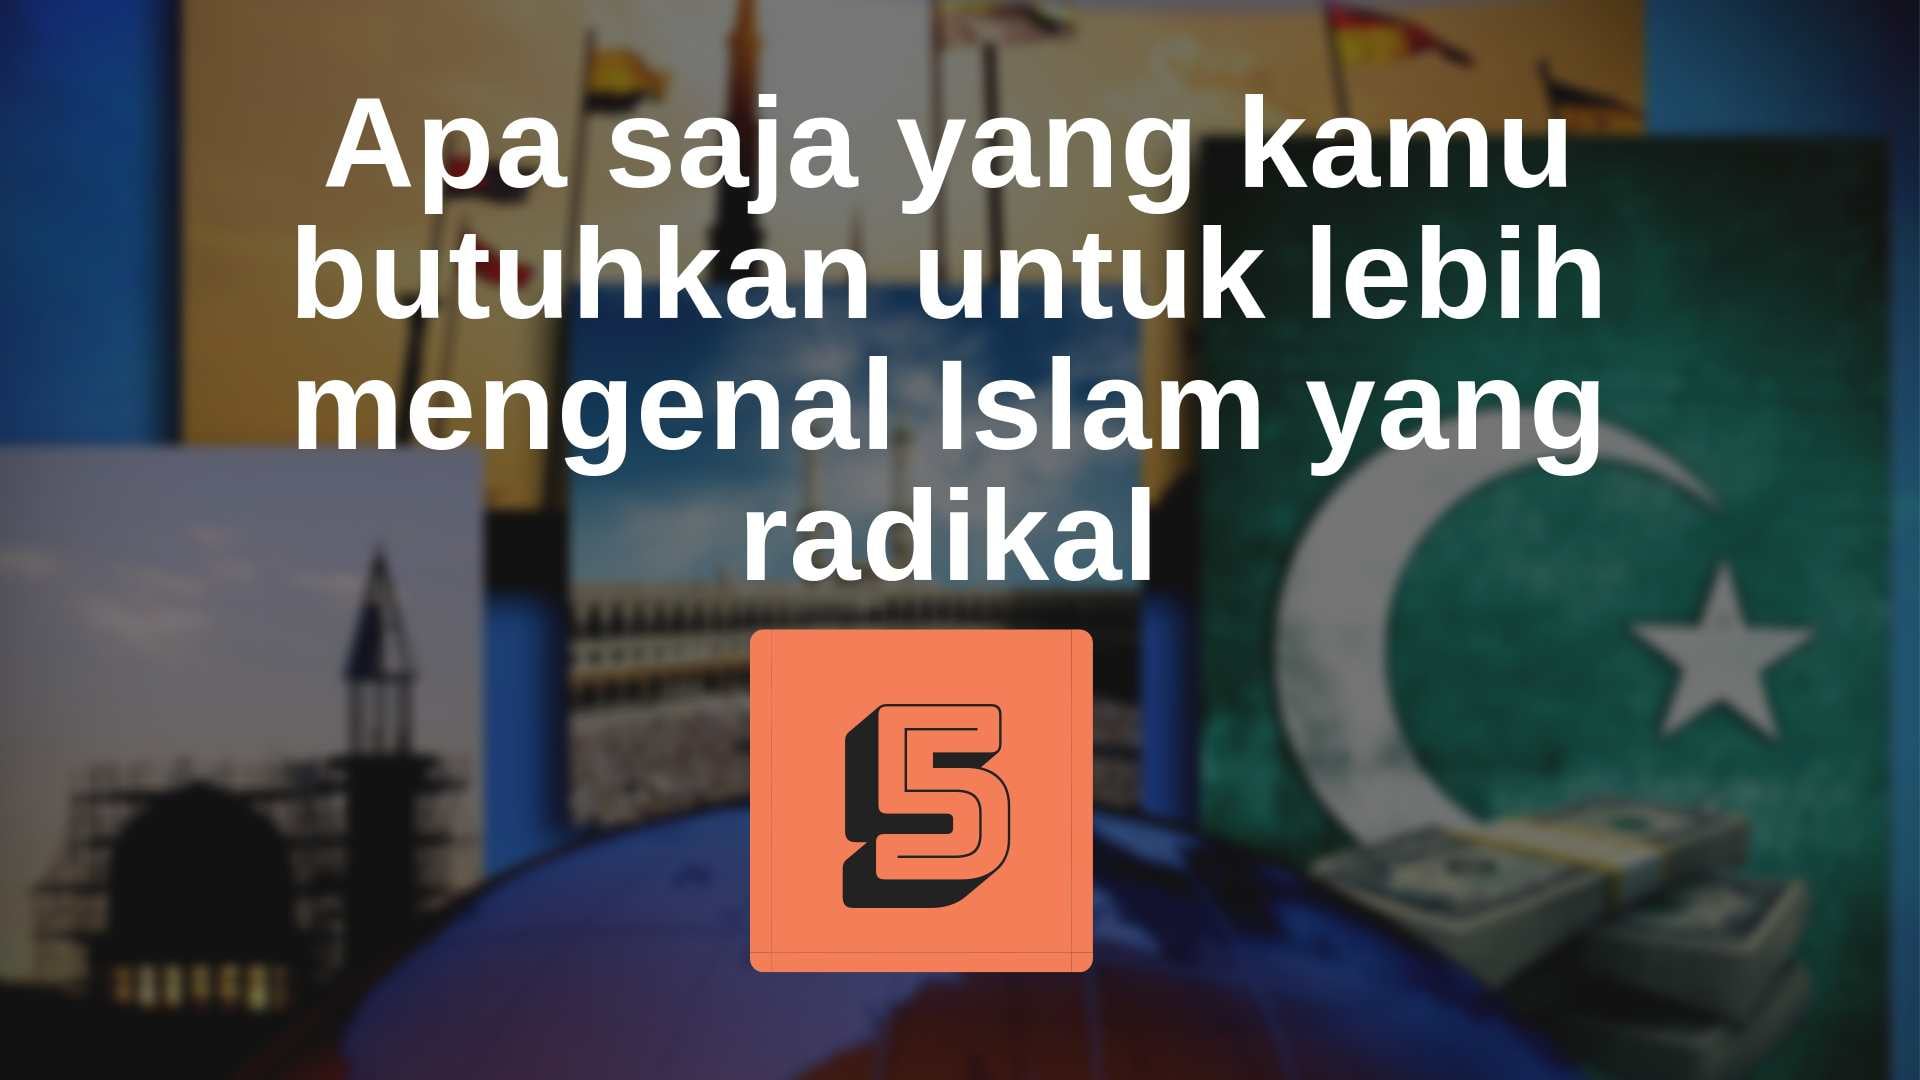 5. Apa saja yang kamu butuhkan untuk lebih mengenal Islam yang radikal